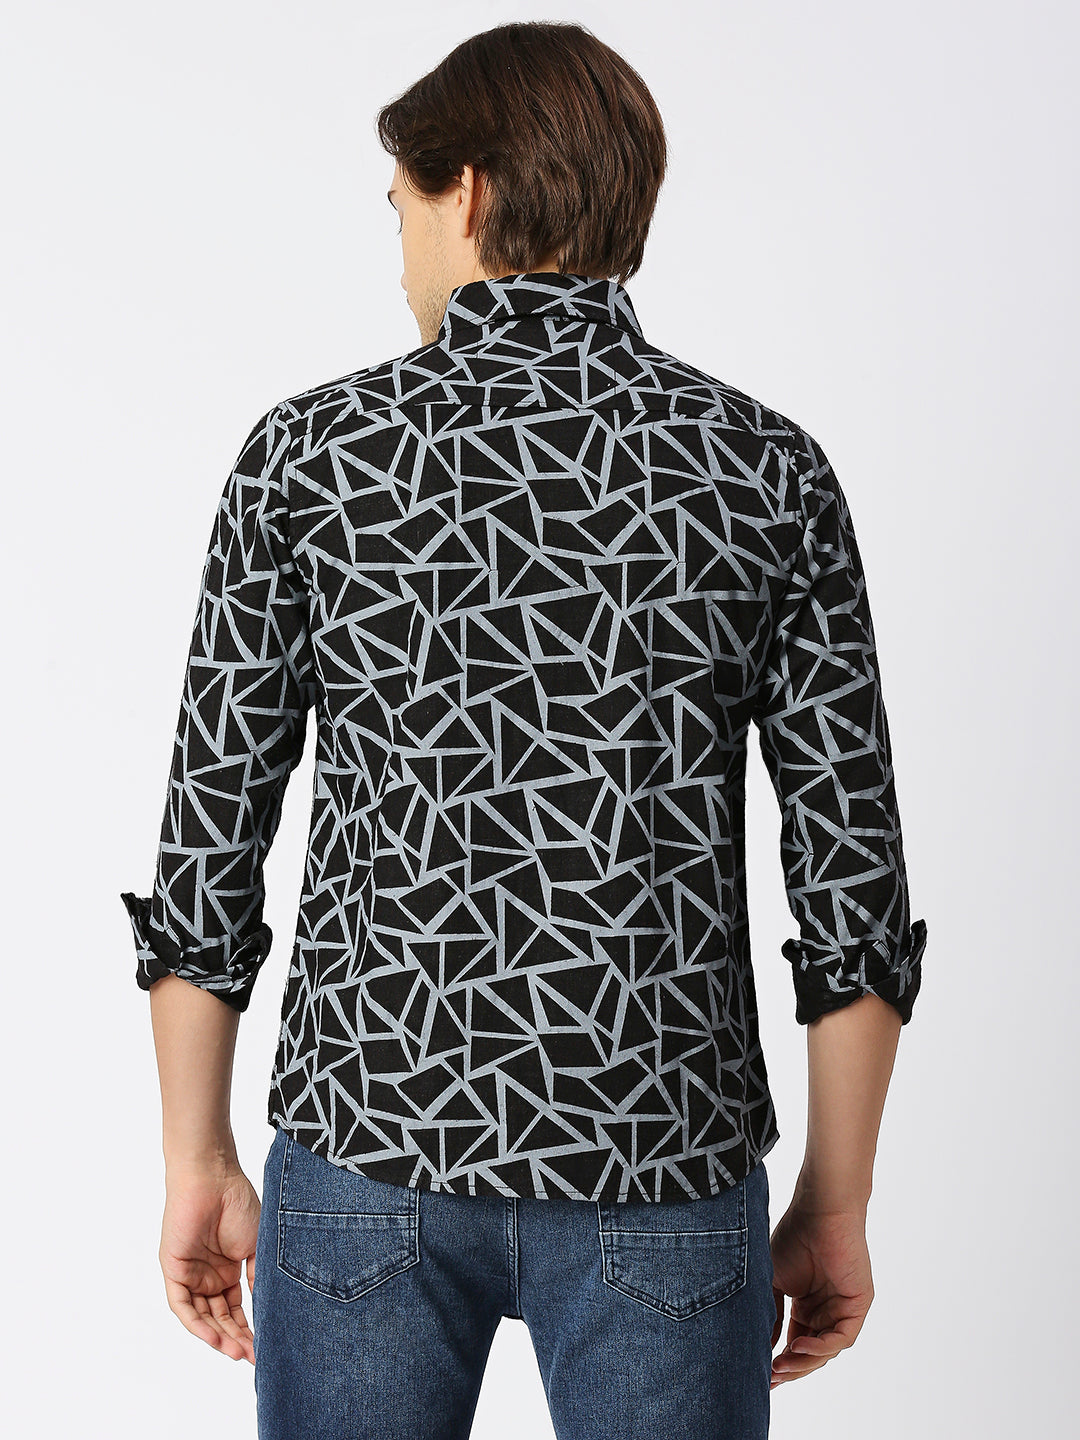 Mosaic Black & Grey Abstract Hemp Bamboo Full Sleeve Shirt